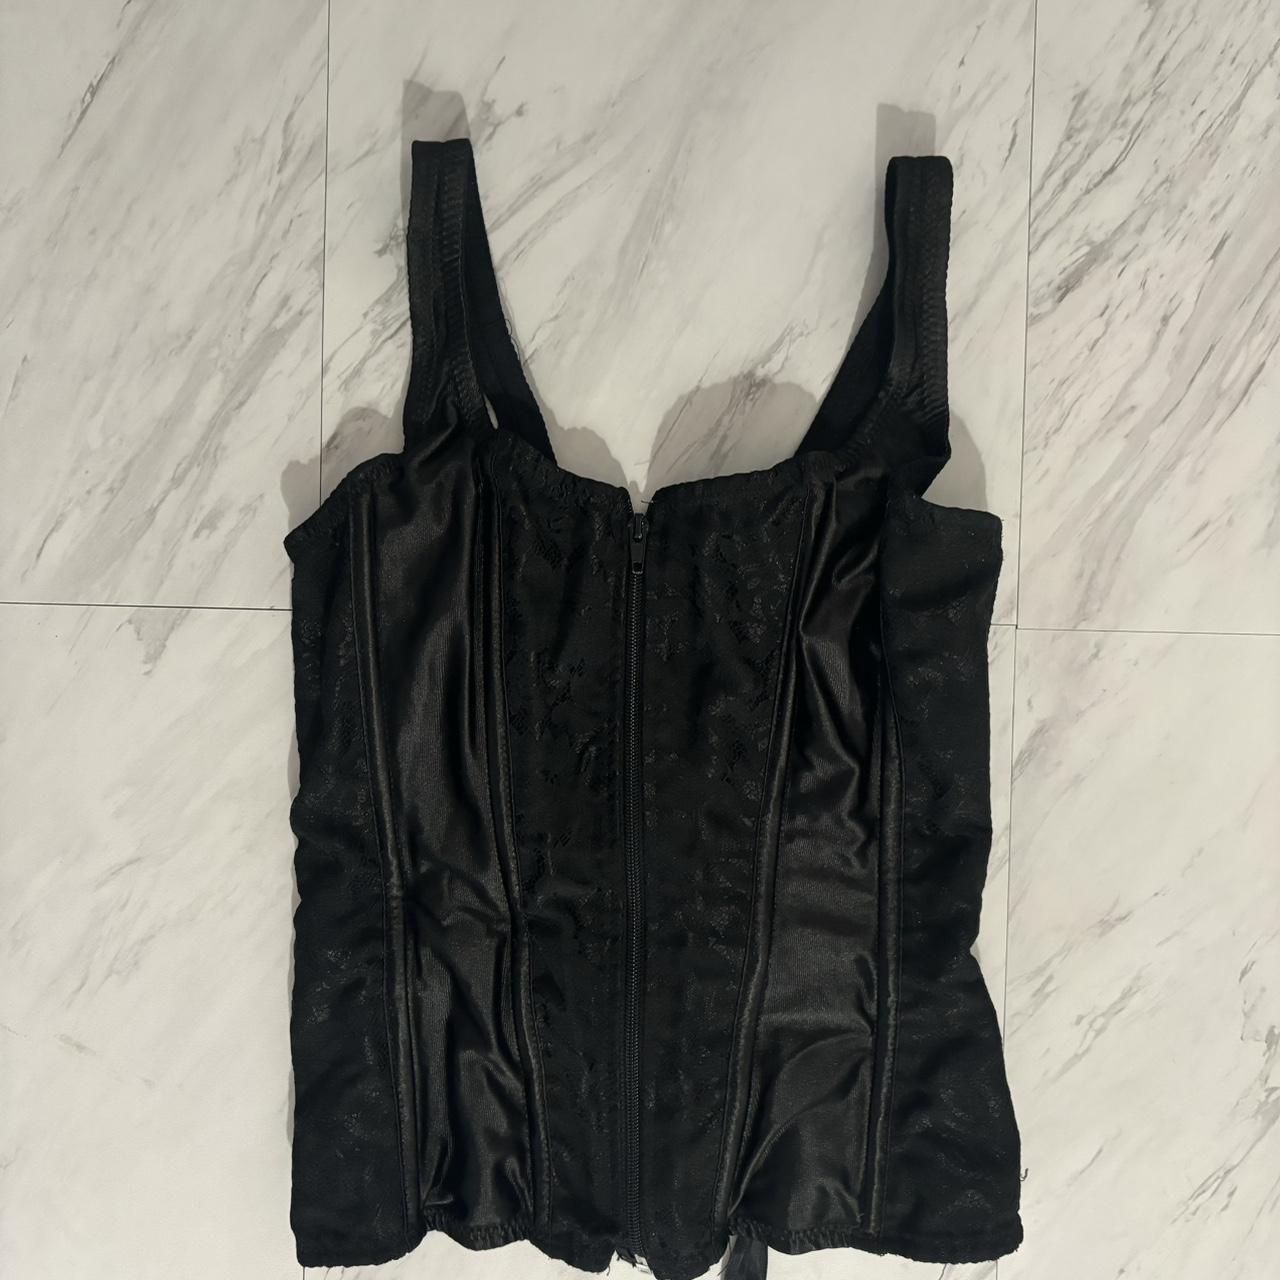 Vintage black corset Minor flaw shown in last... - Depop